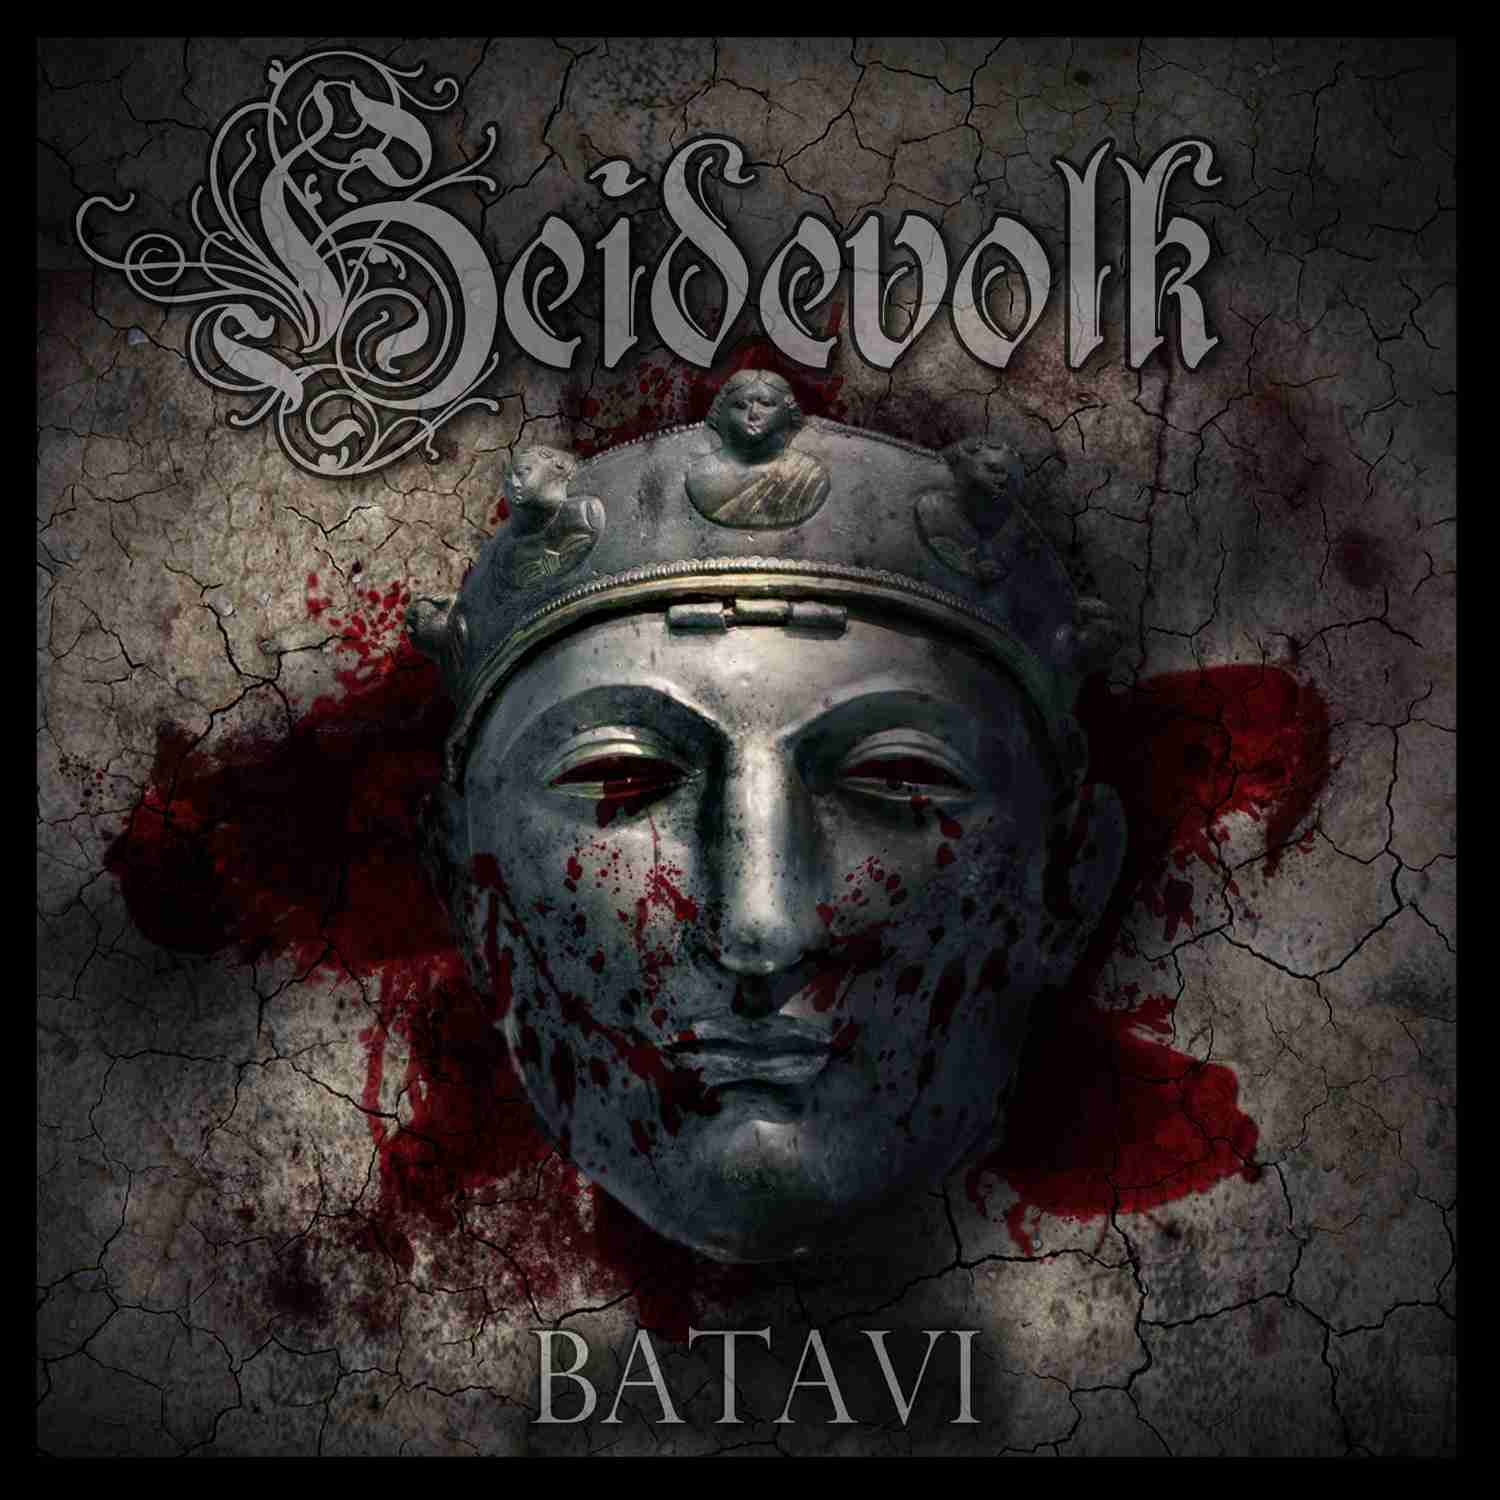 Heidevolk+Batavi+album+cover+art+Roman+mask+Norse+Mythology+Blog+interview+Joris+Boghtdrincker+myth+religion+music.jpg